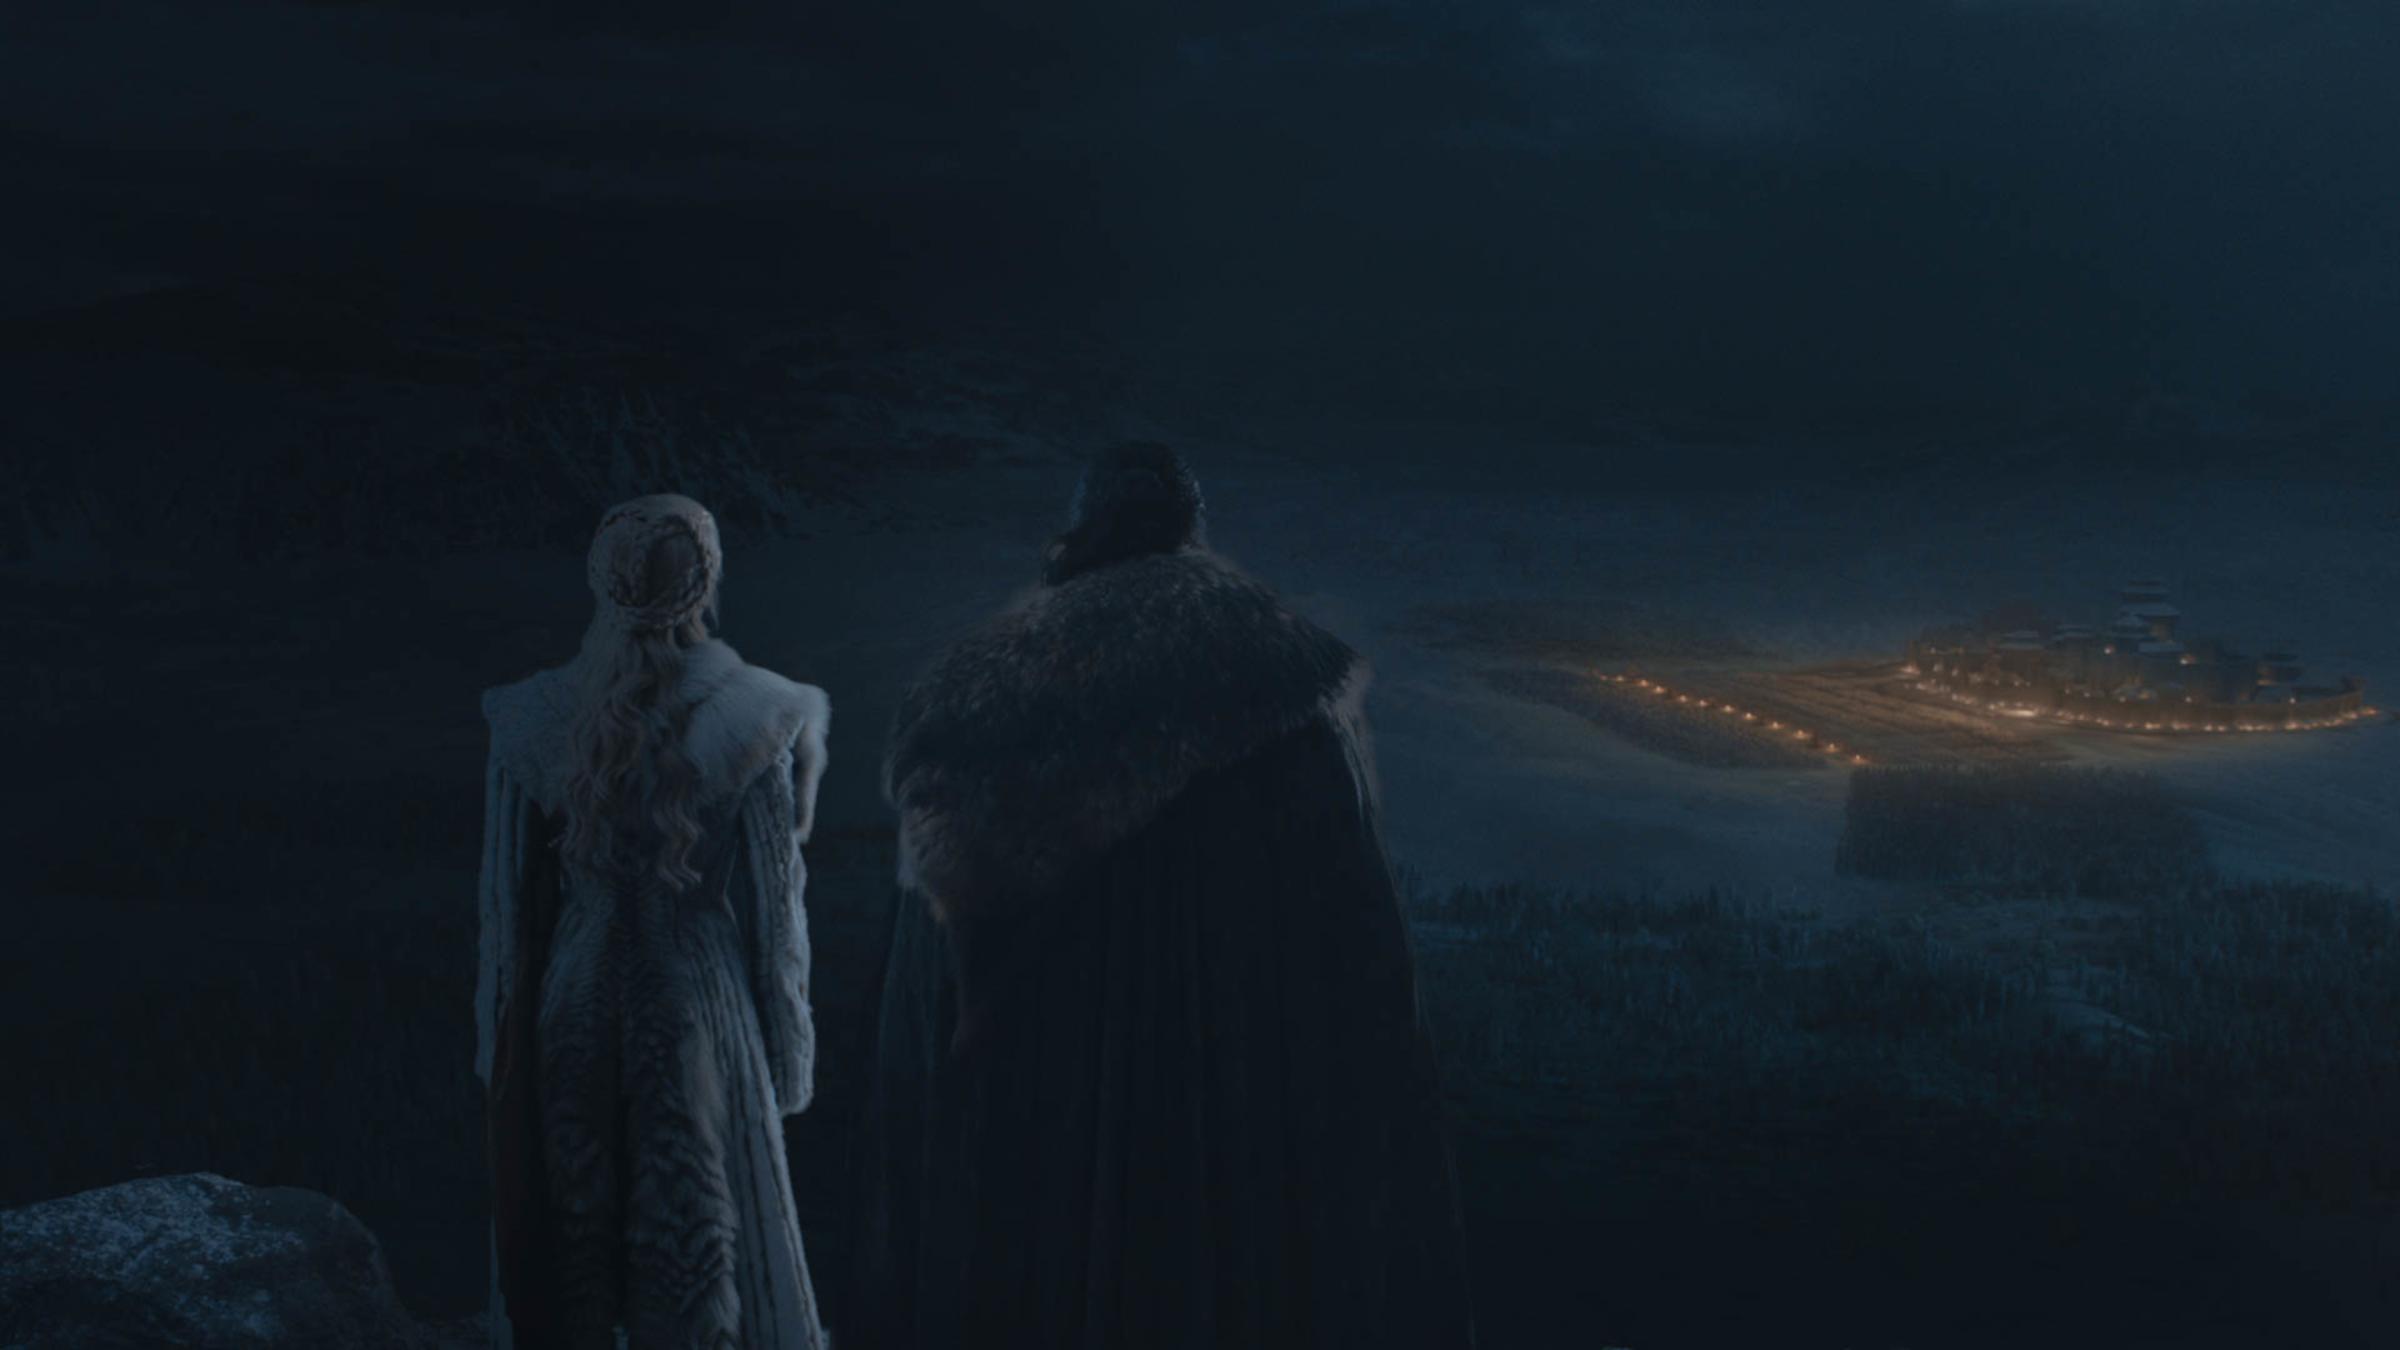 Emilia Clarke as Daenerys Targaryen and Kit Harington as Jon Snow view the Battle of Winterfell